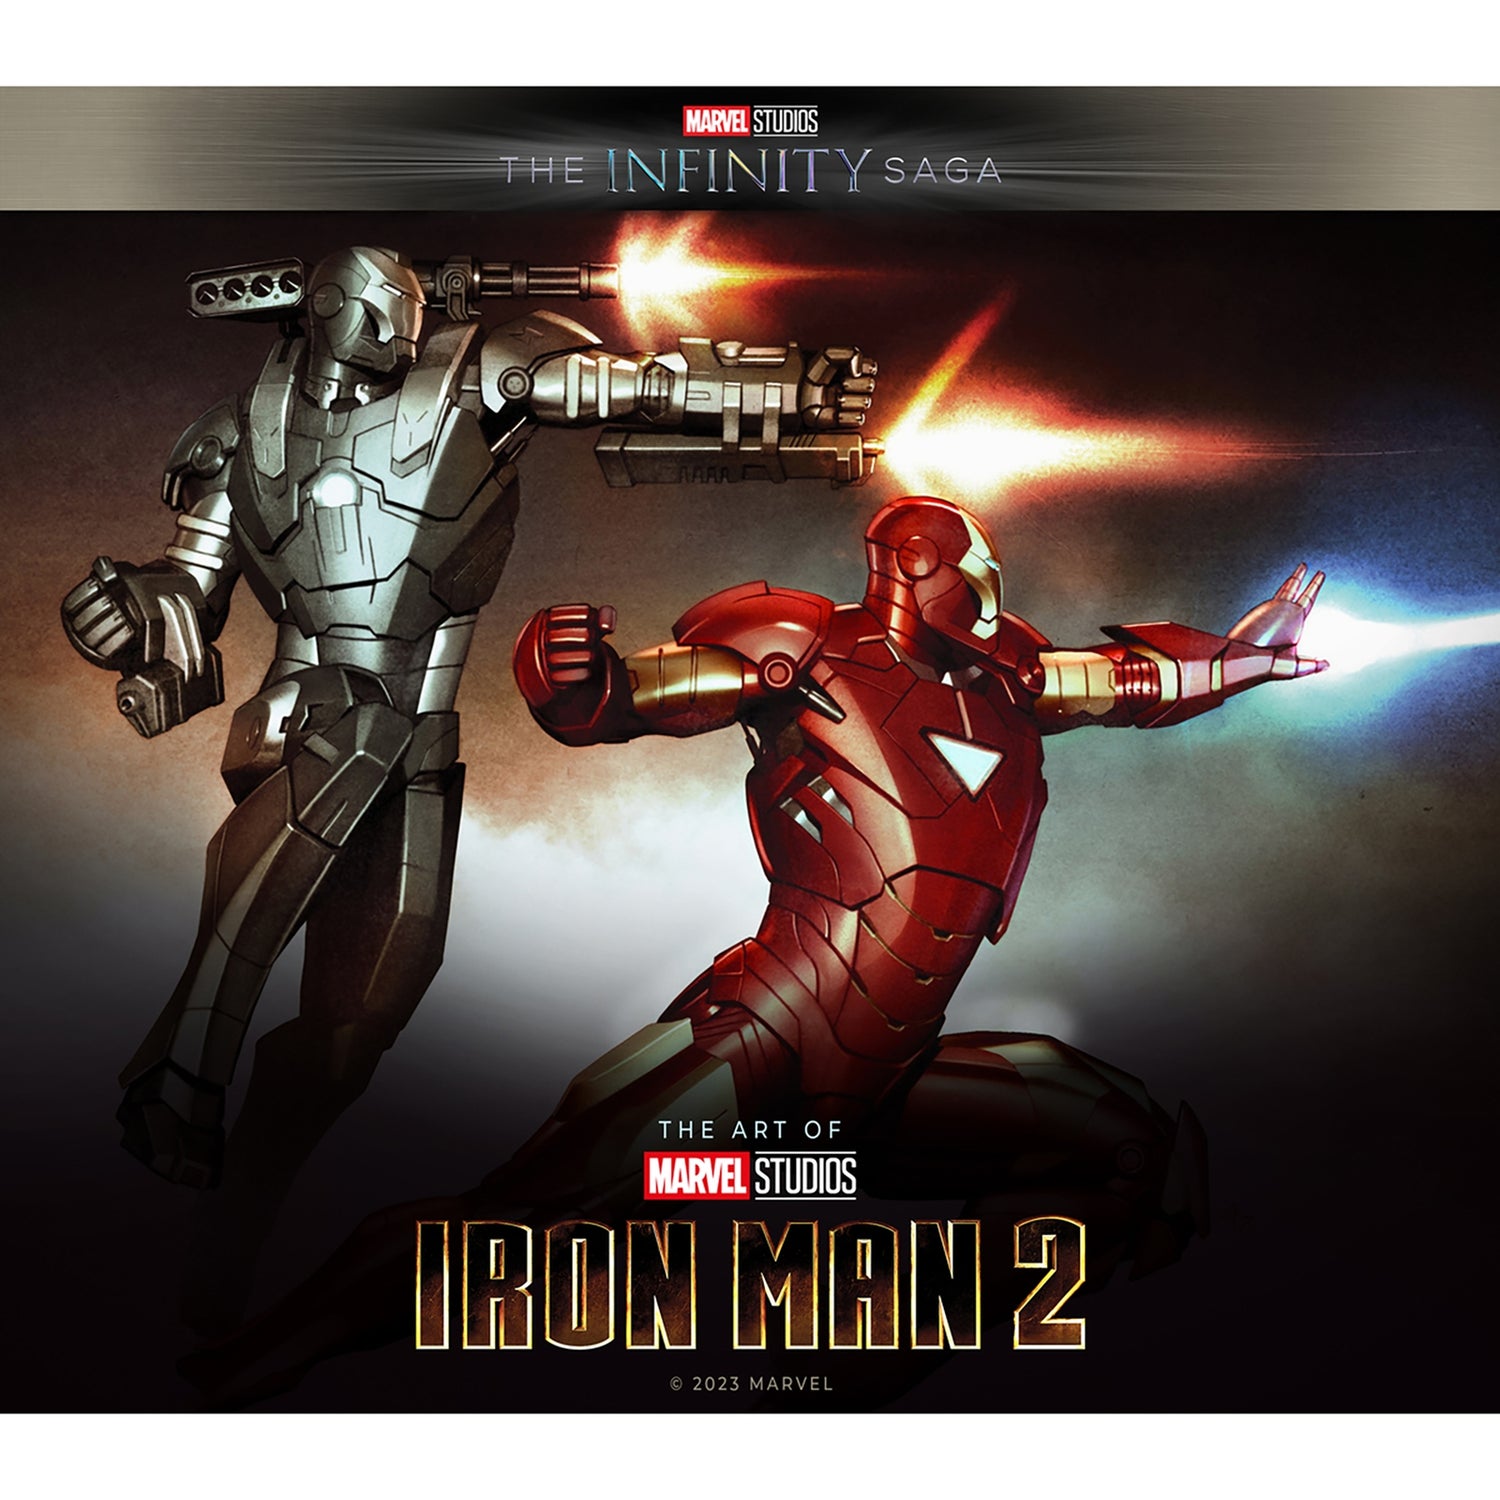 Marvel Studios' The Infinity Saga - Iron Man 2: The Art of the Movie